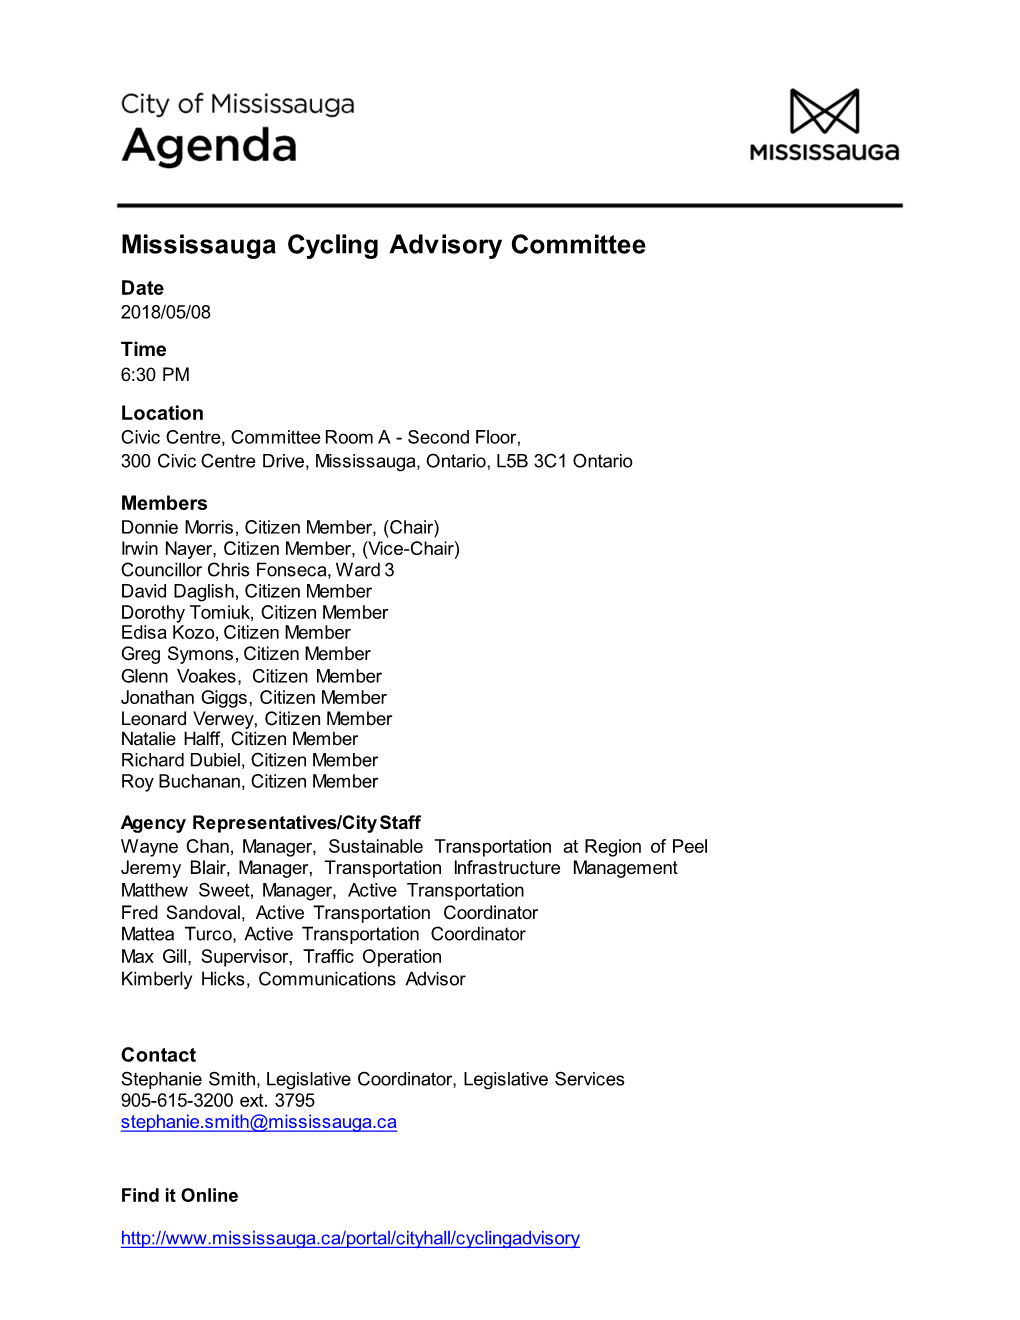 Mississauga Cycling Advisory Committee Agenda – May 8, 2018